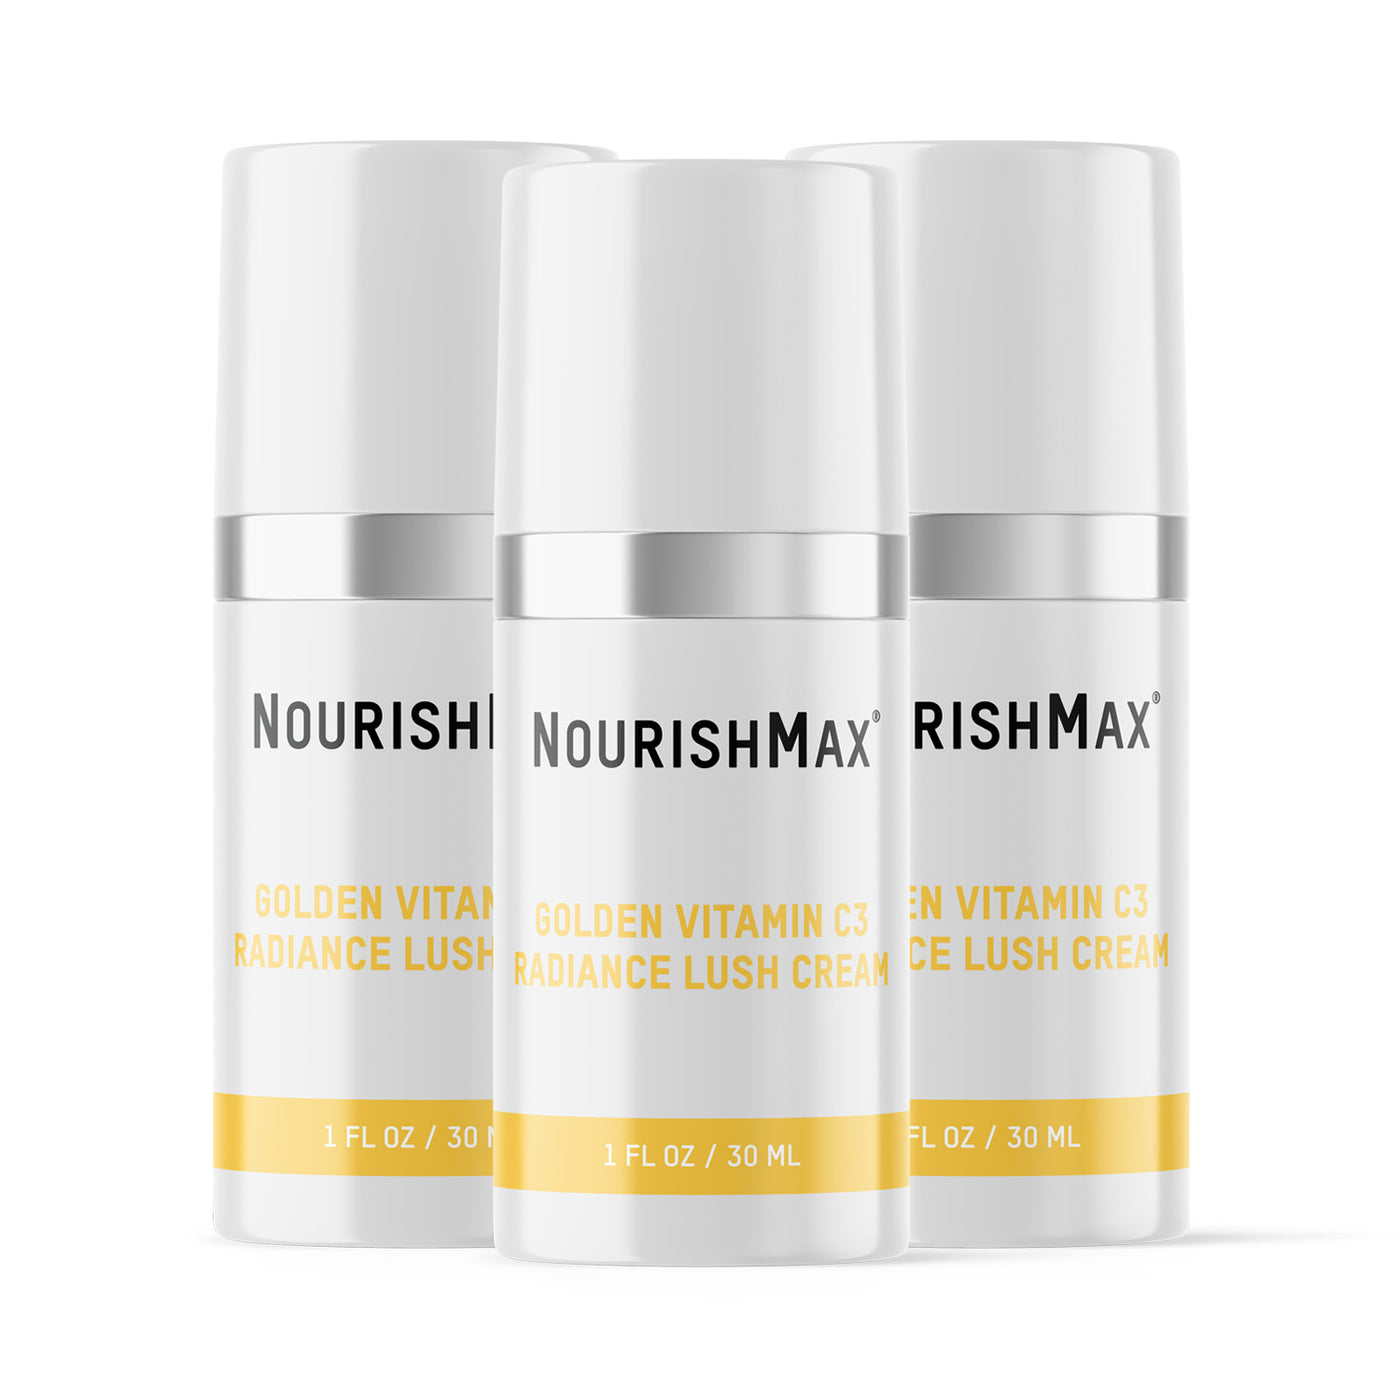 3 Golden Vitamin C3 Radiance Lush Cream